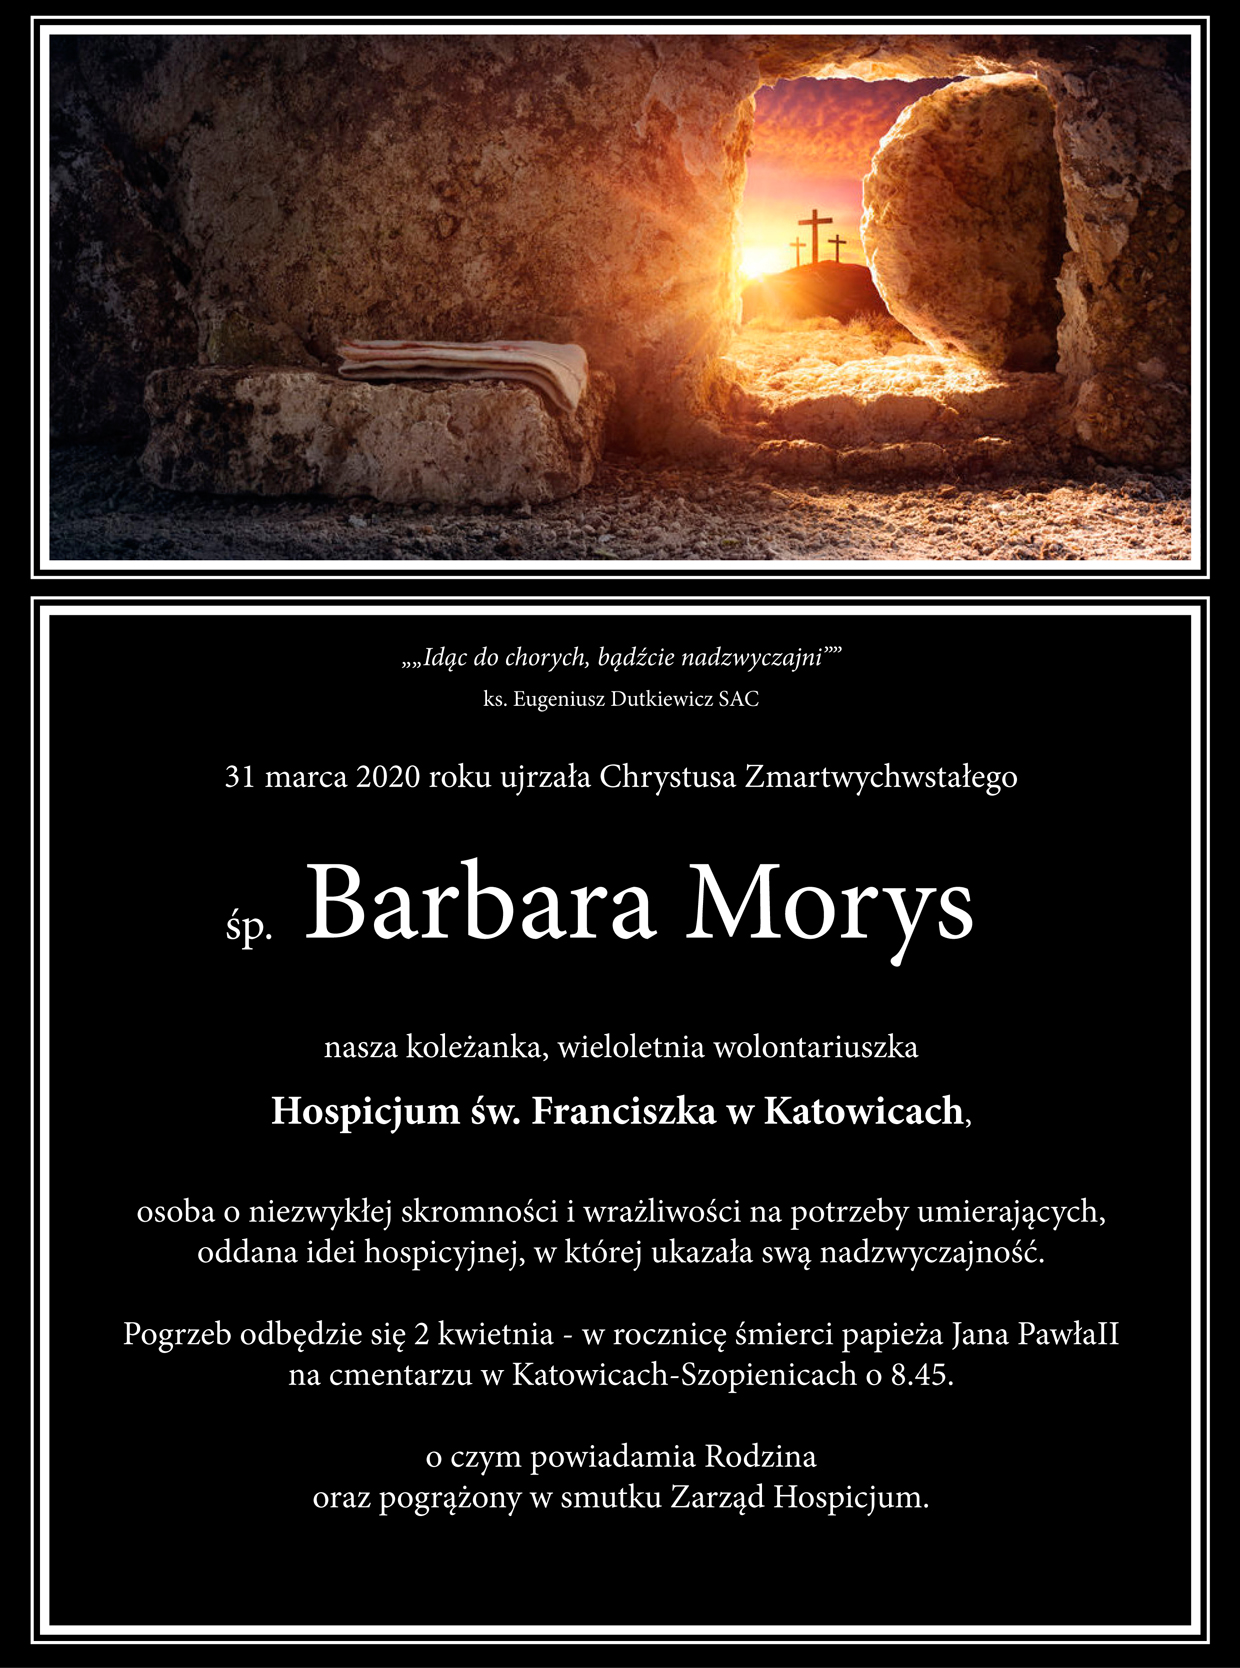 nekrolog śp. Barbara Morys